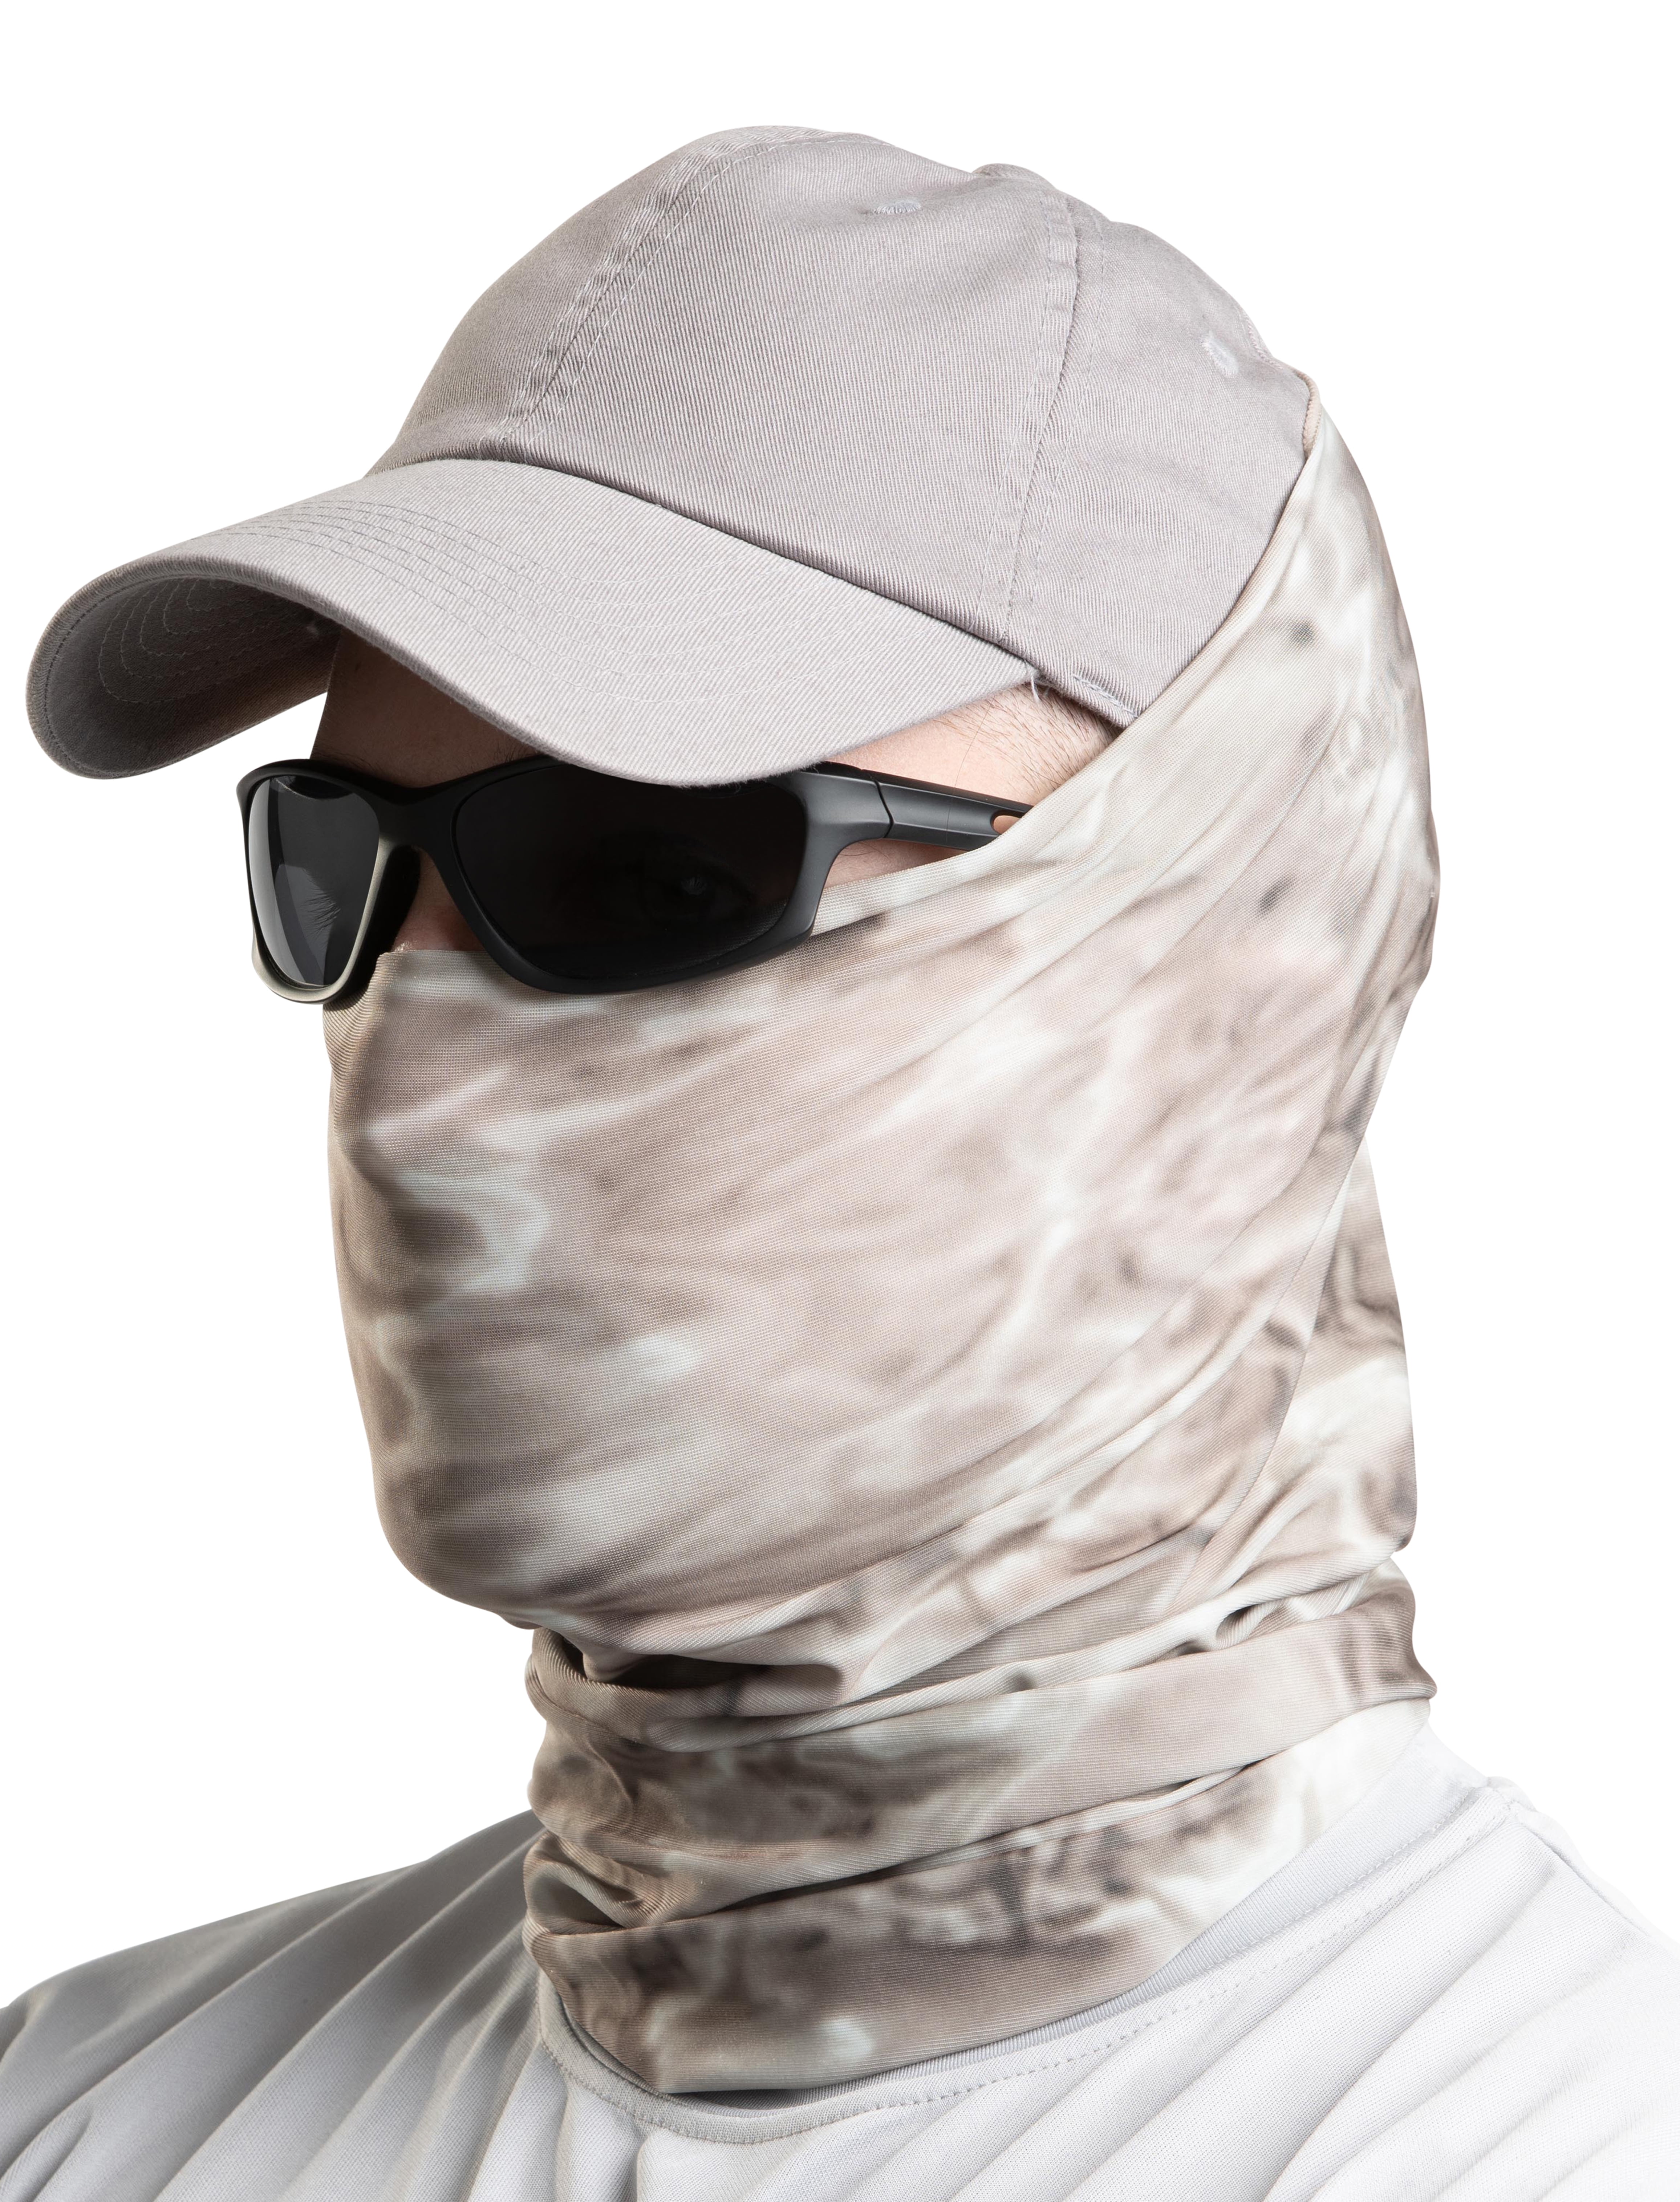 Camouflage Neck Gaiter Mask Face Fishing Scarf Sun Cover Headwear Balaclava UPF 